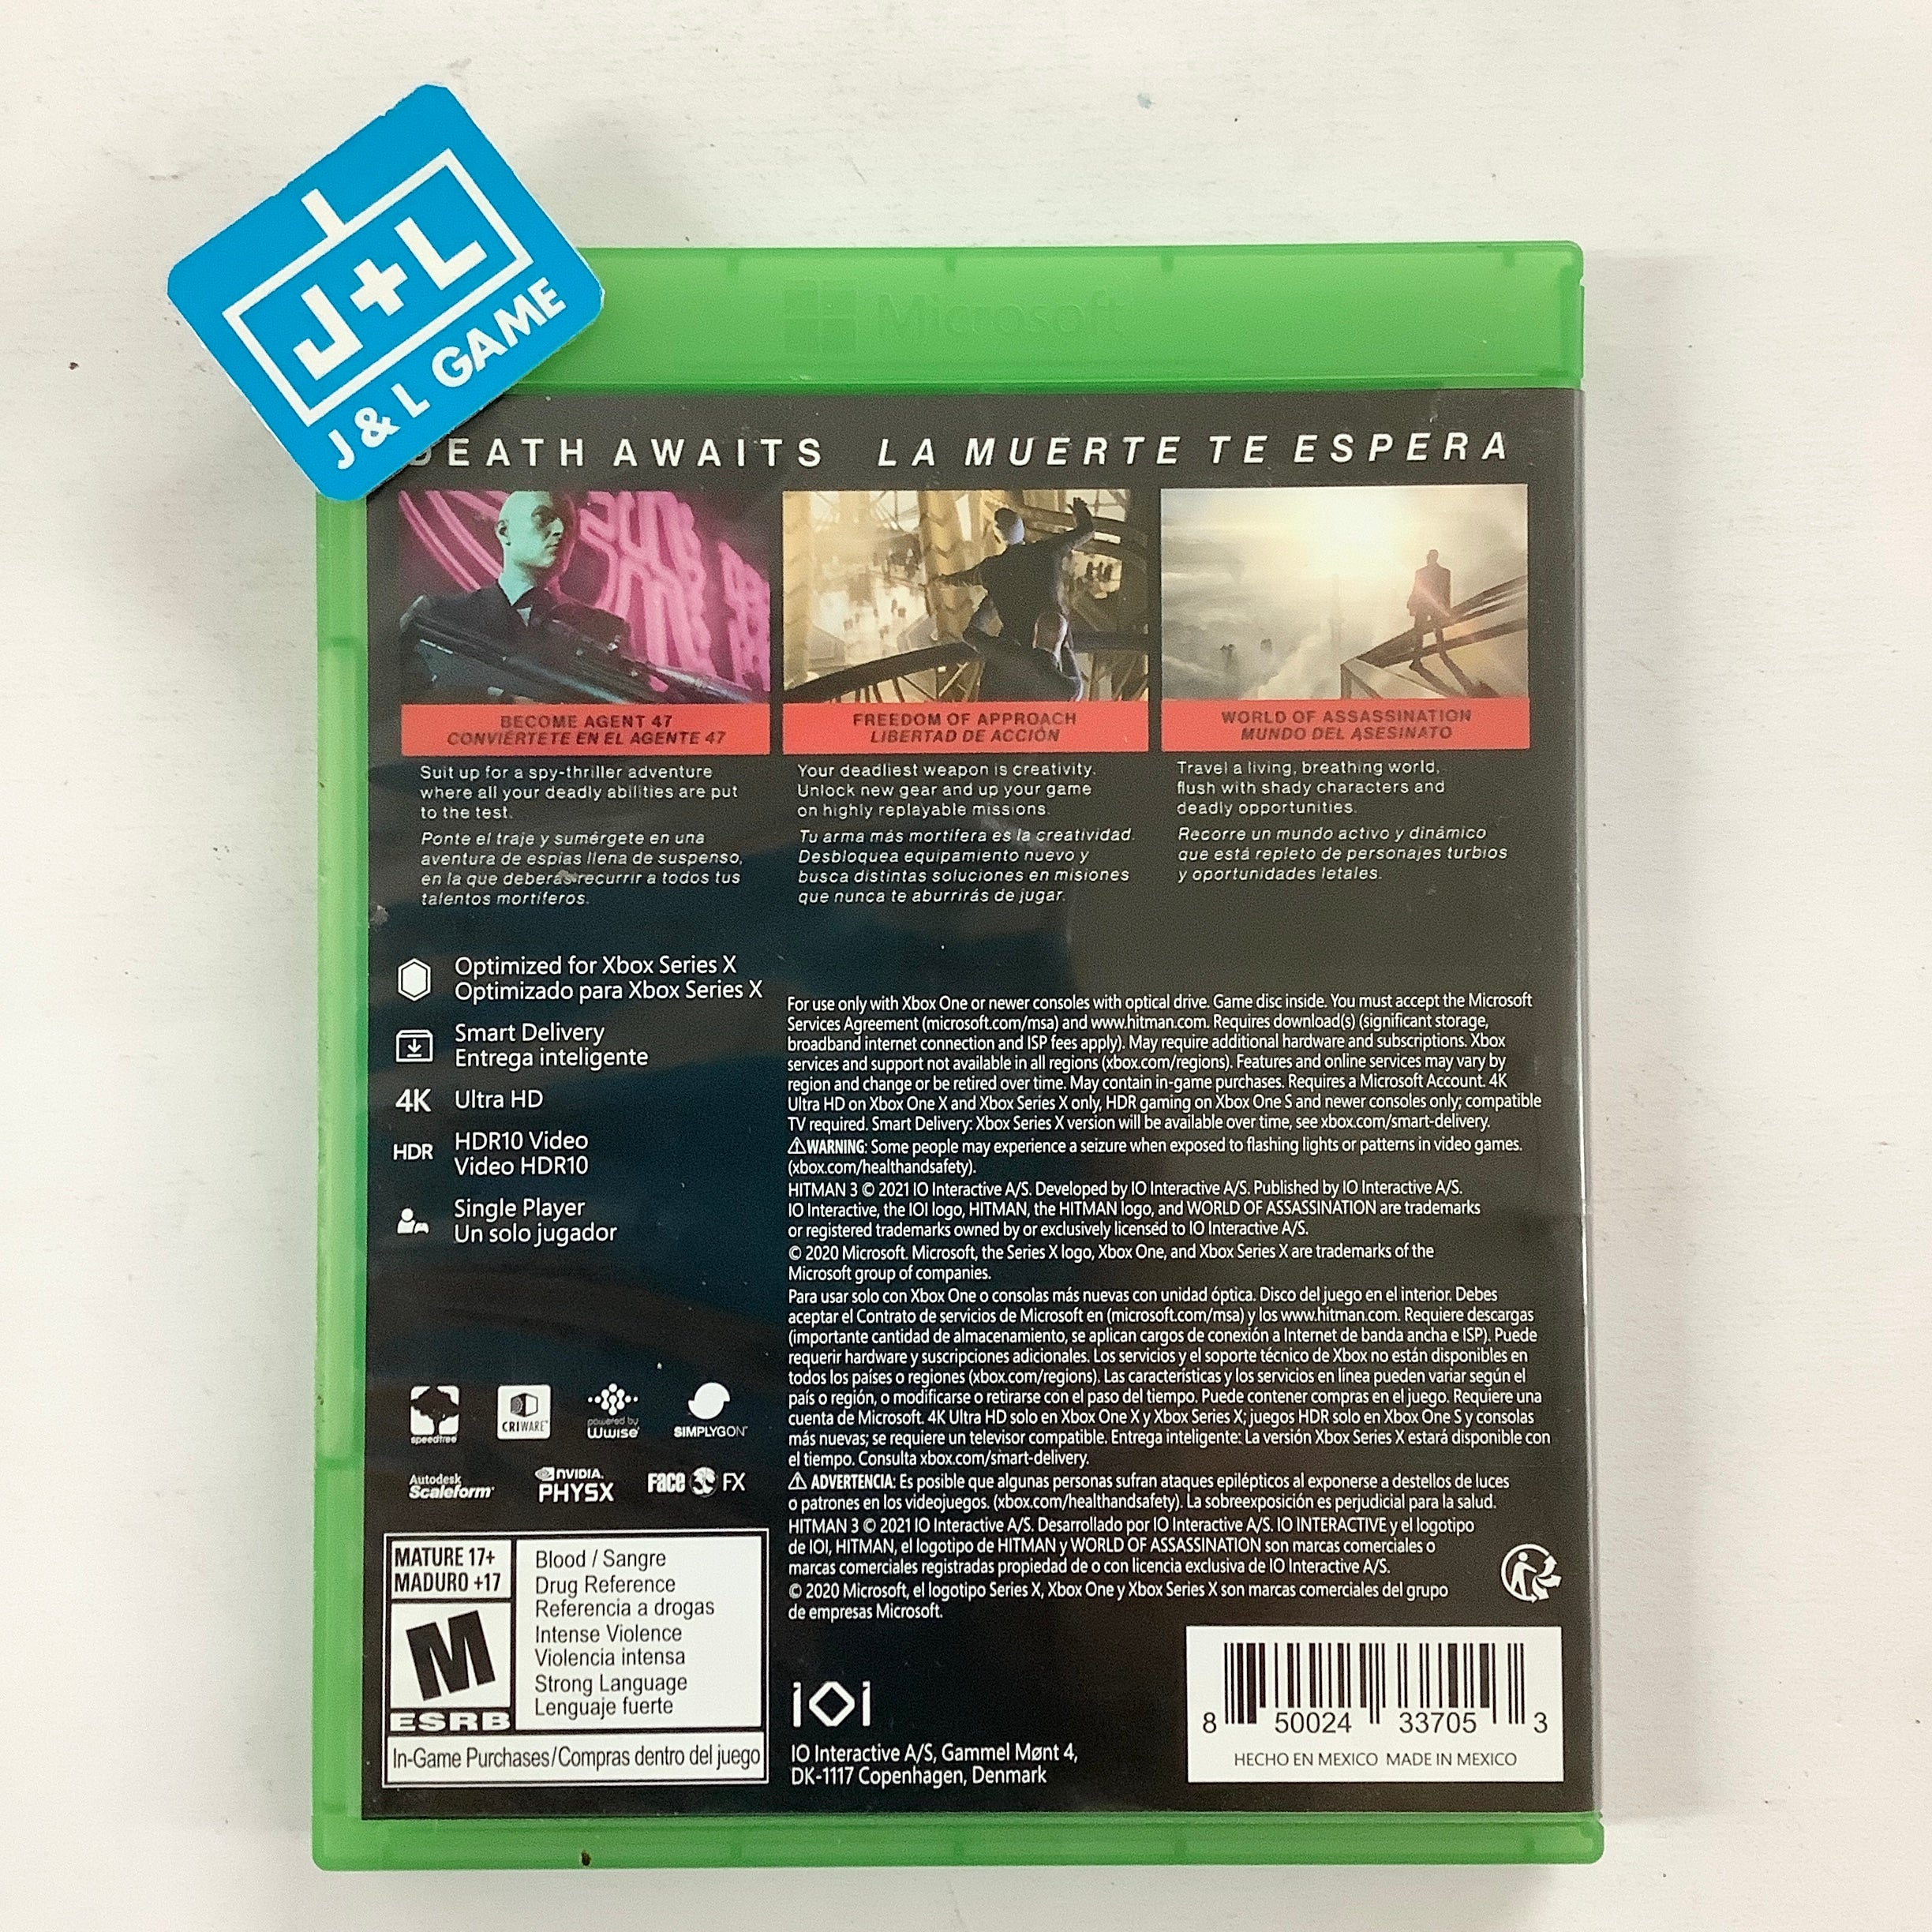 Hitman 3 - (XSX) Xbox Series X [Pre-Owned] Video Games IO Interactive A/S   